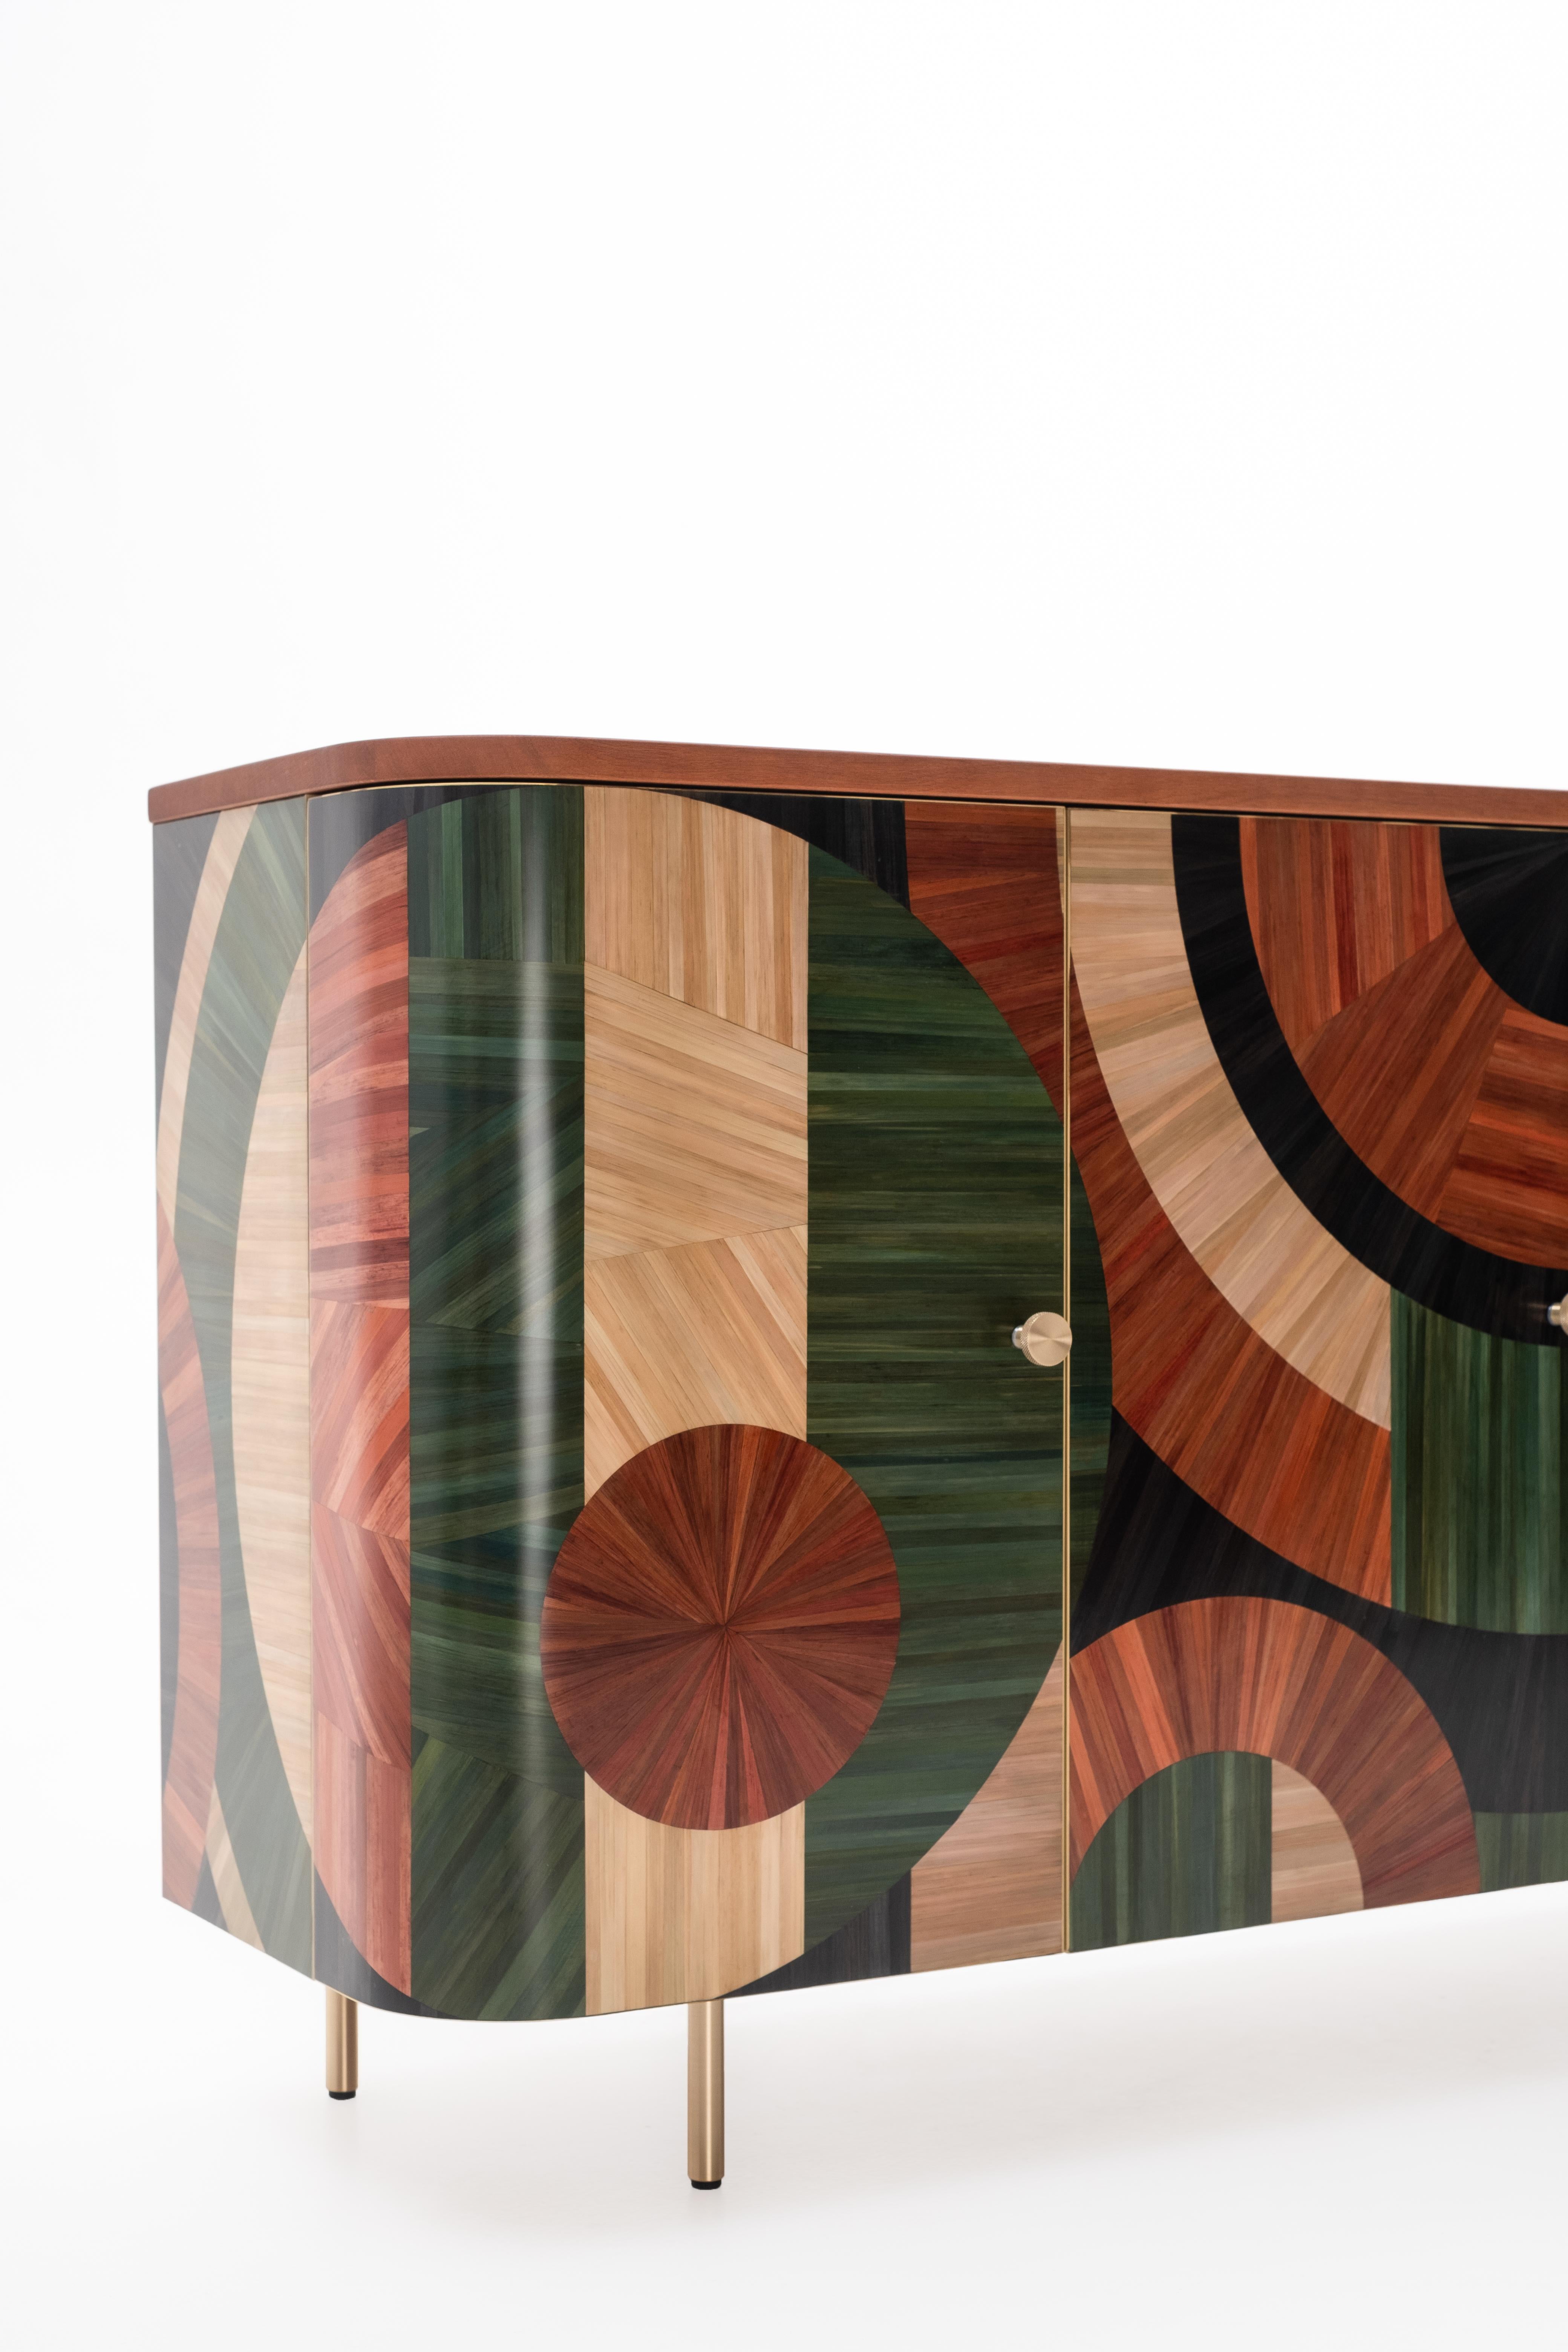 Solomia Straw Marquetry Art Deco Wood Cabinet Green Orange Black by RUDA Studio For Sale 9